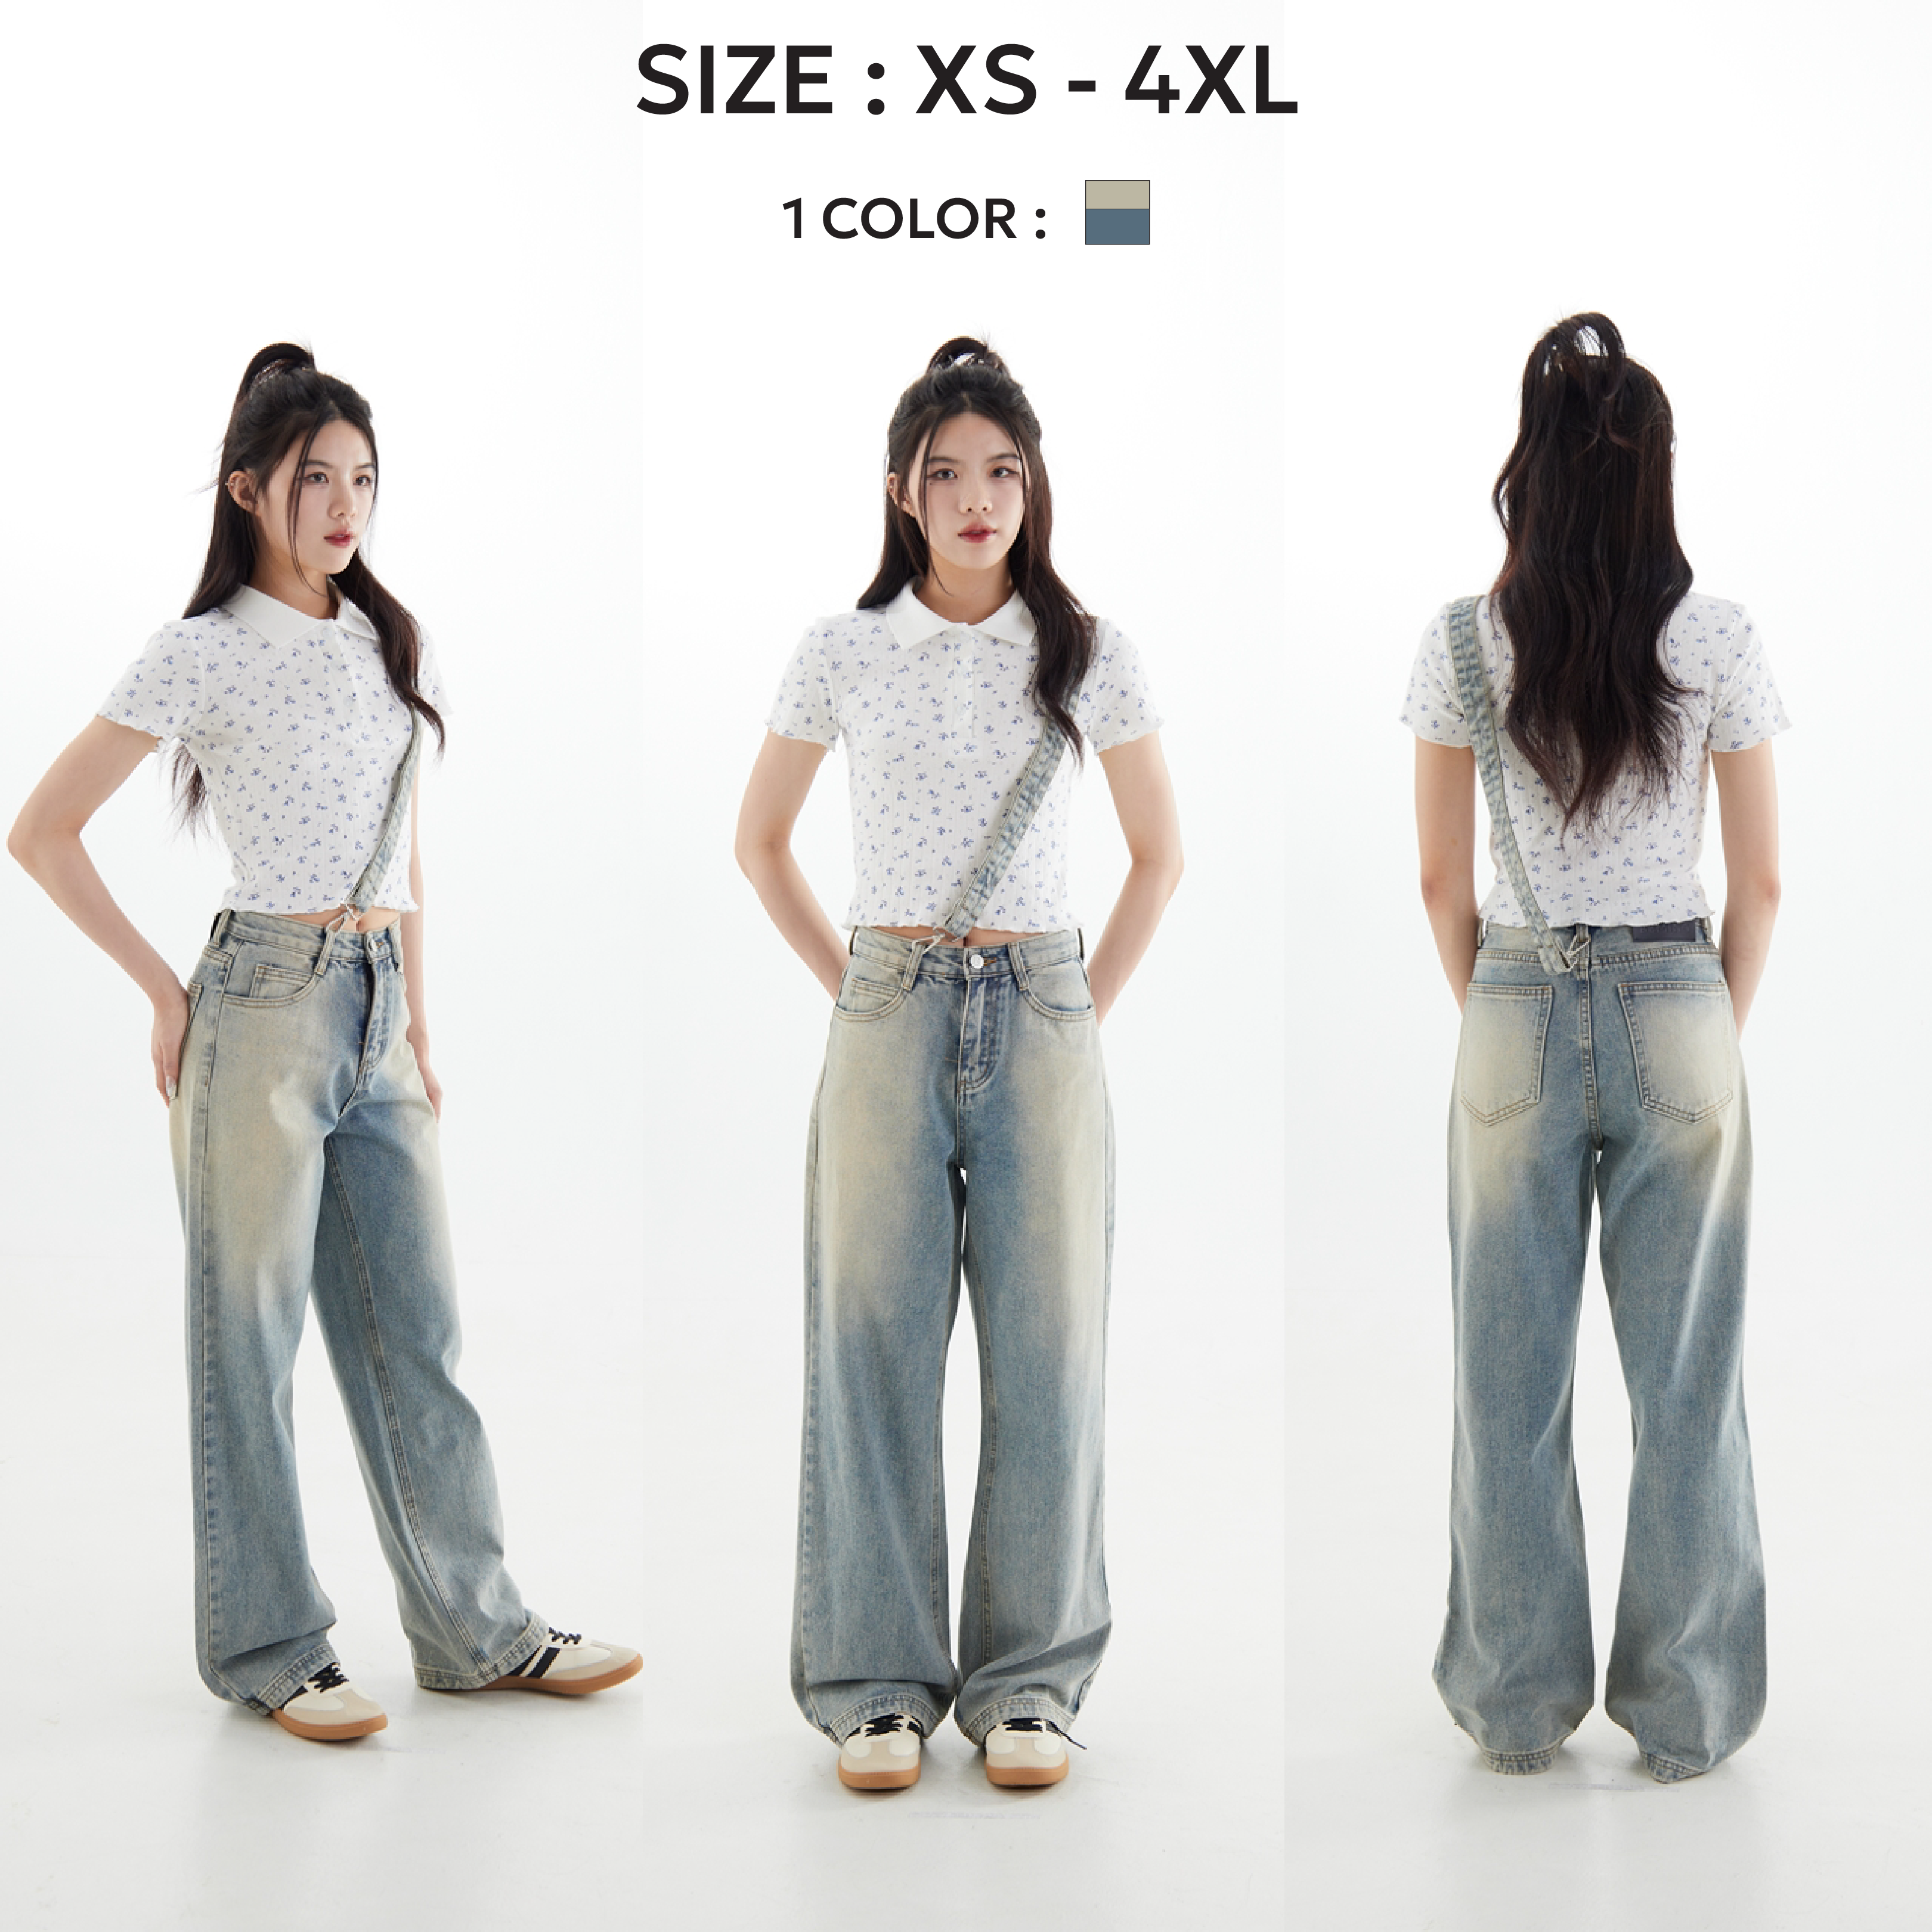 Bemingjeans005(XS-4XL) - Cindy jeans ❄️ กางเกงยีนส์ทรงขากระบอกใหญ่ ดีเทลสายพร้อมตะขอเกี่ยว